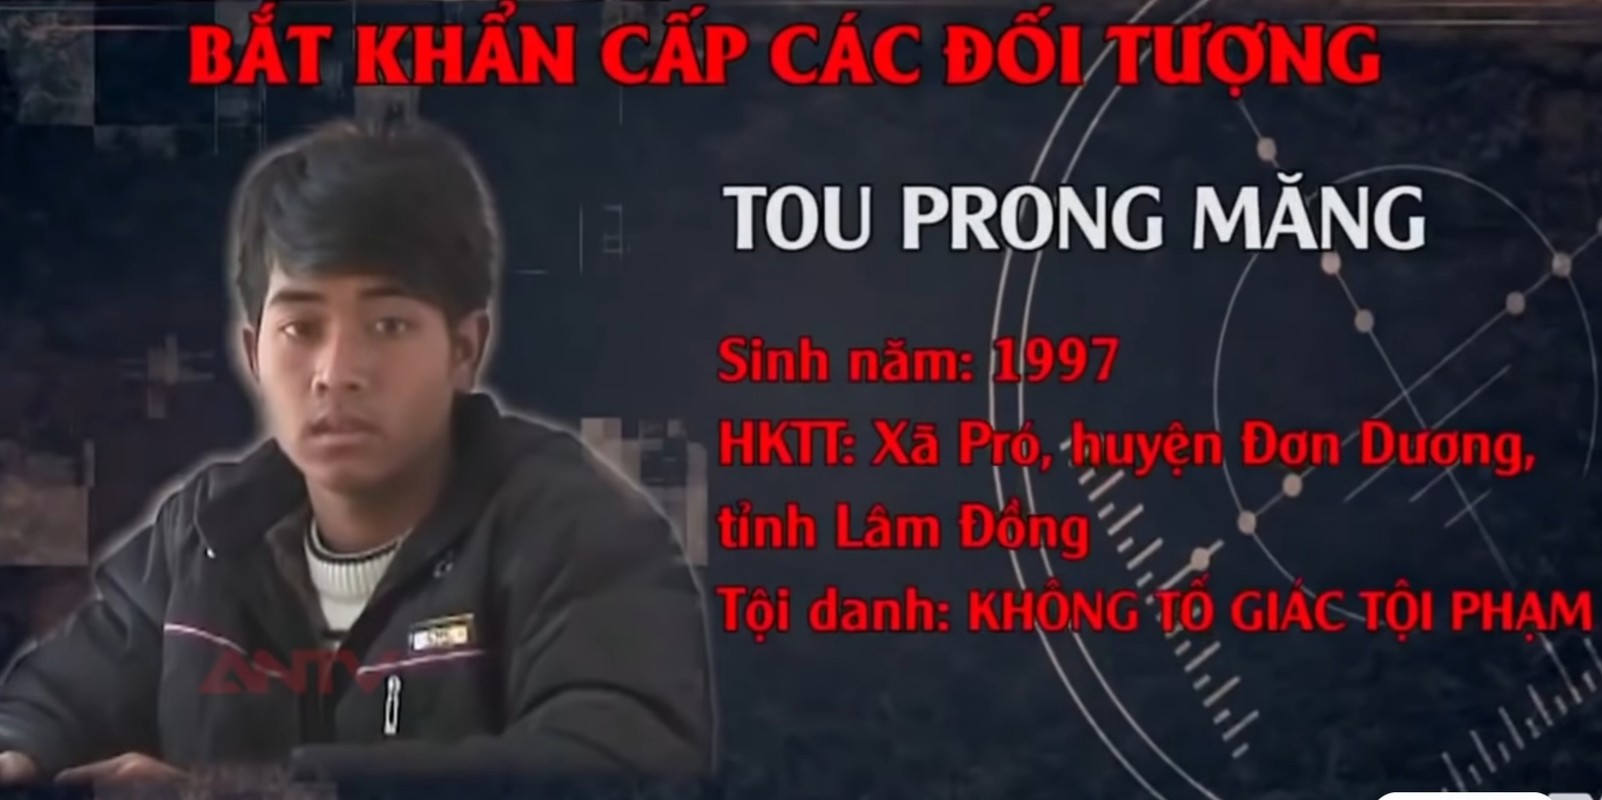 Hanh trinh pha an: Thi the ben dong suoi to cao ke sat nhan mau lanh-Hinh-22